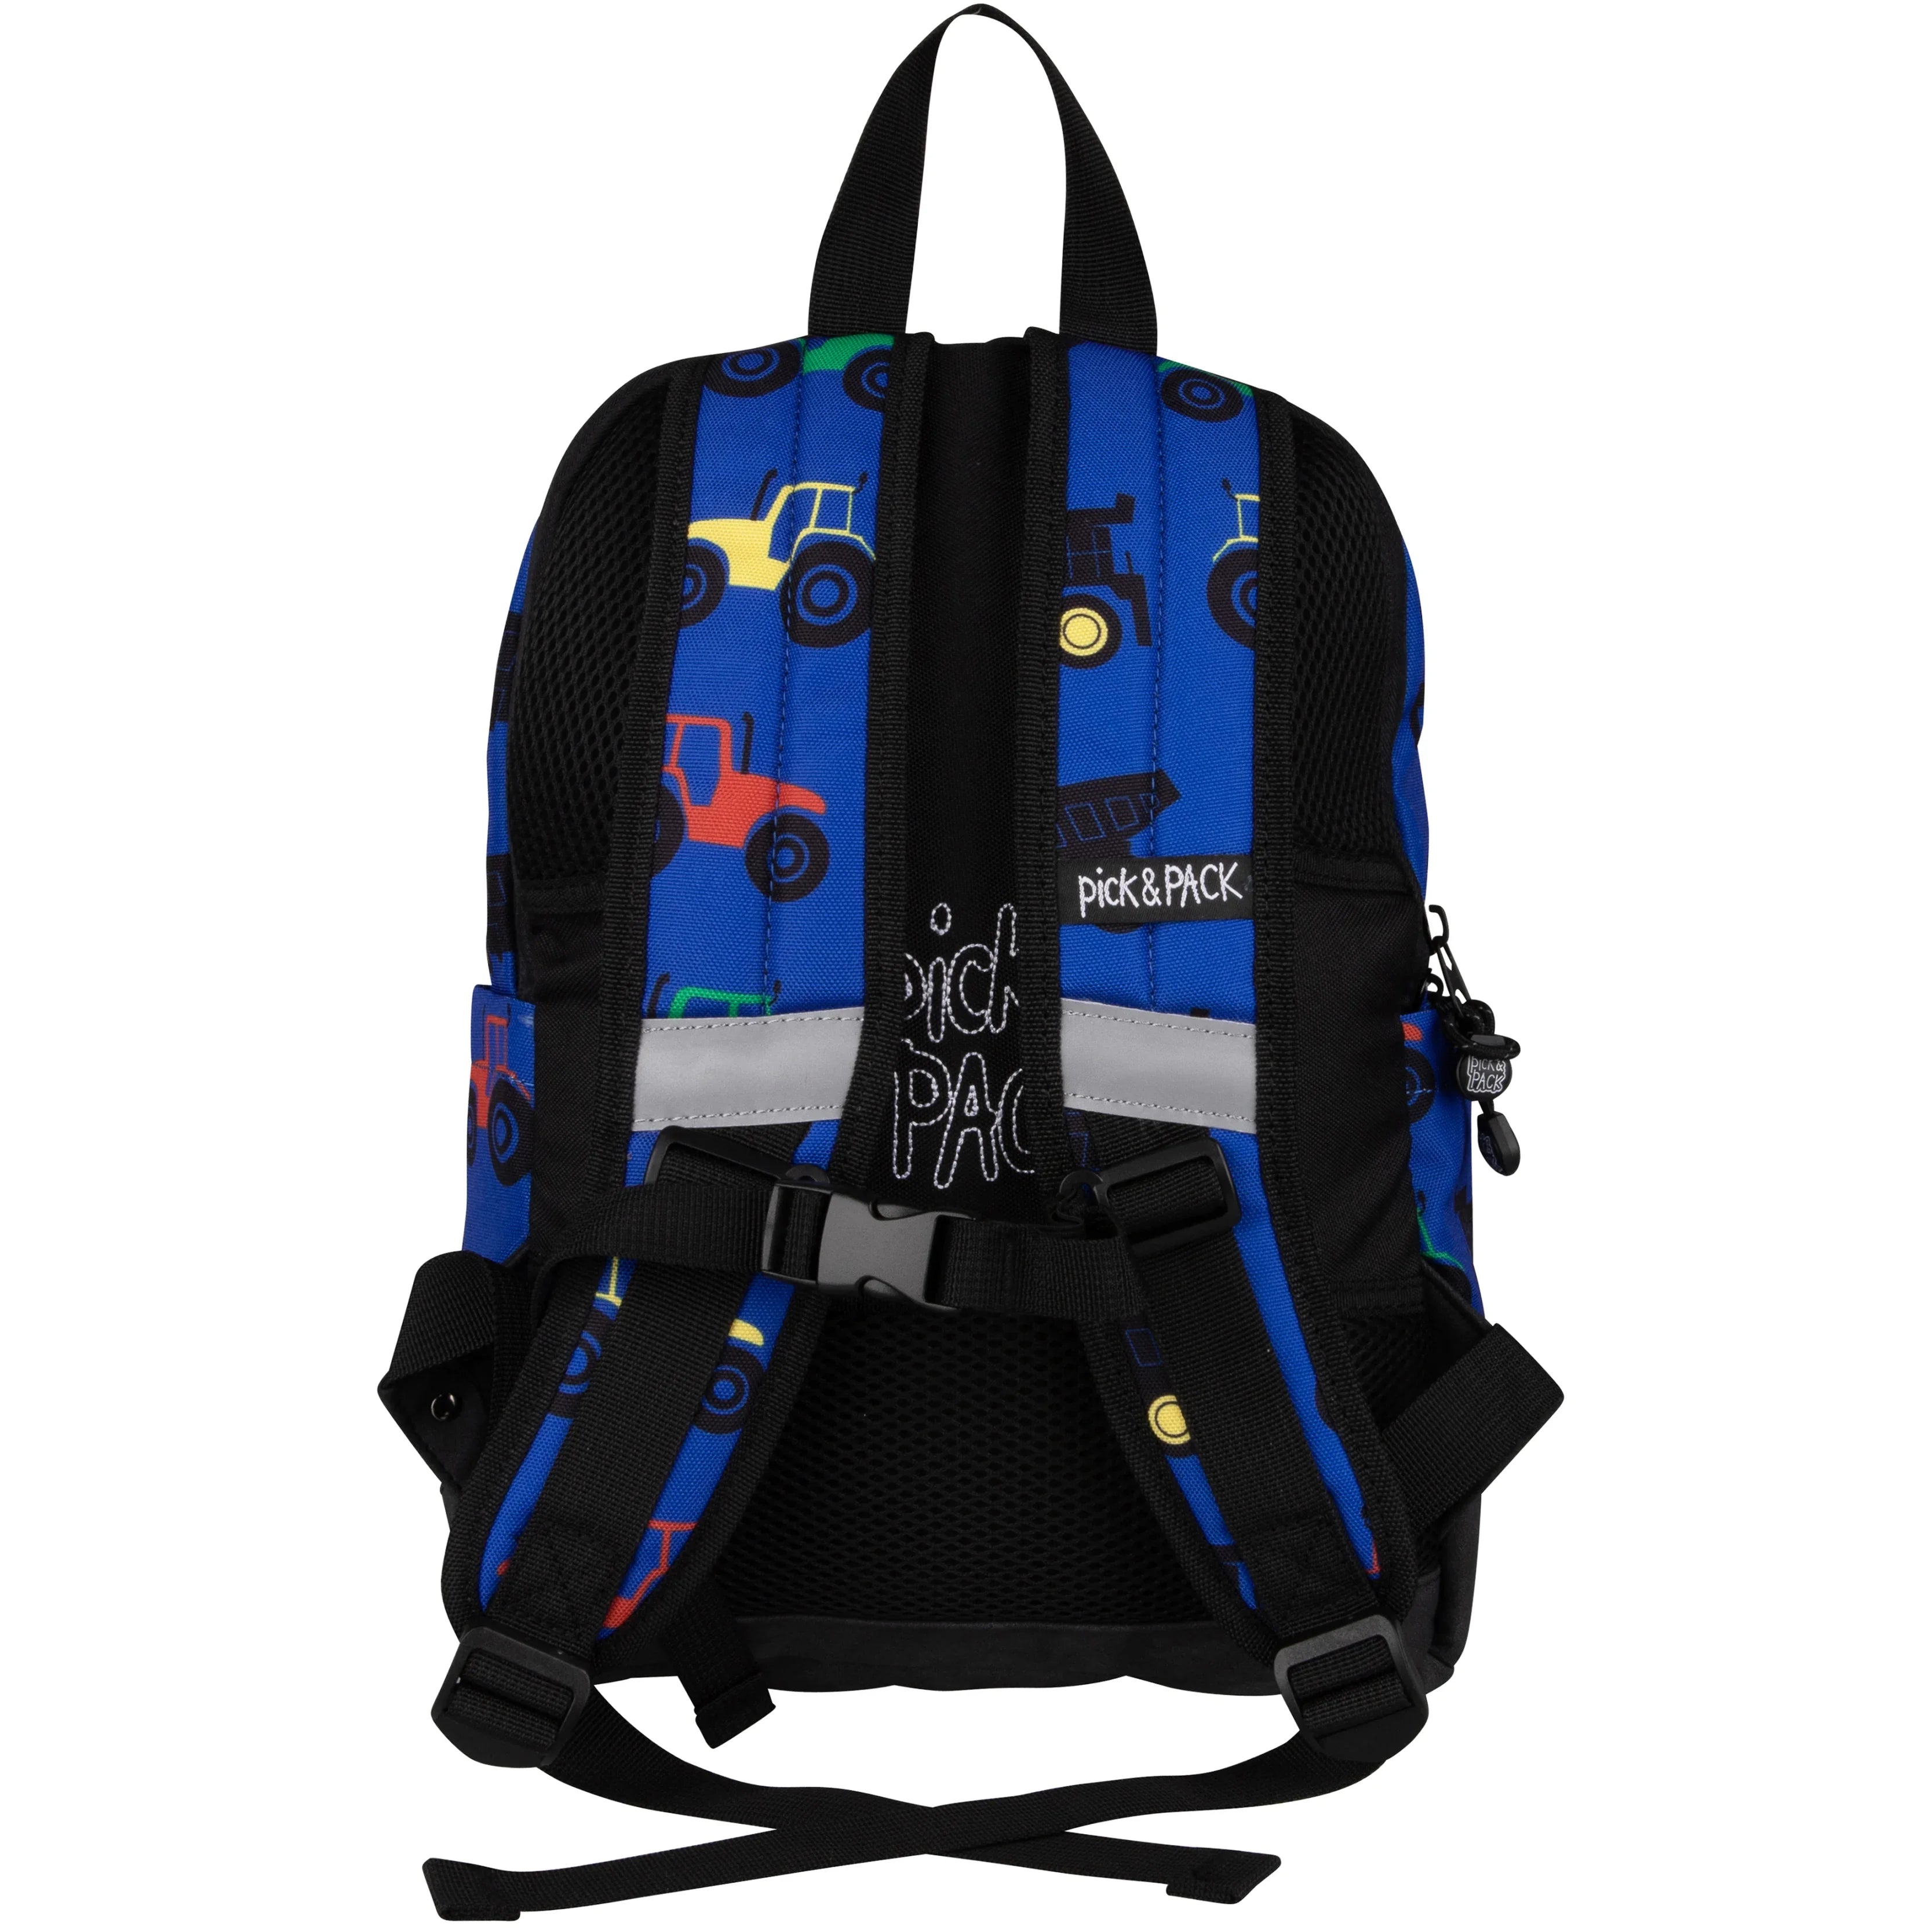 Pick & Pack Tractor children's backpack 37 cm - Blue